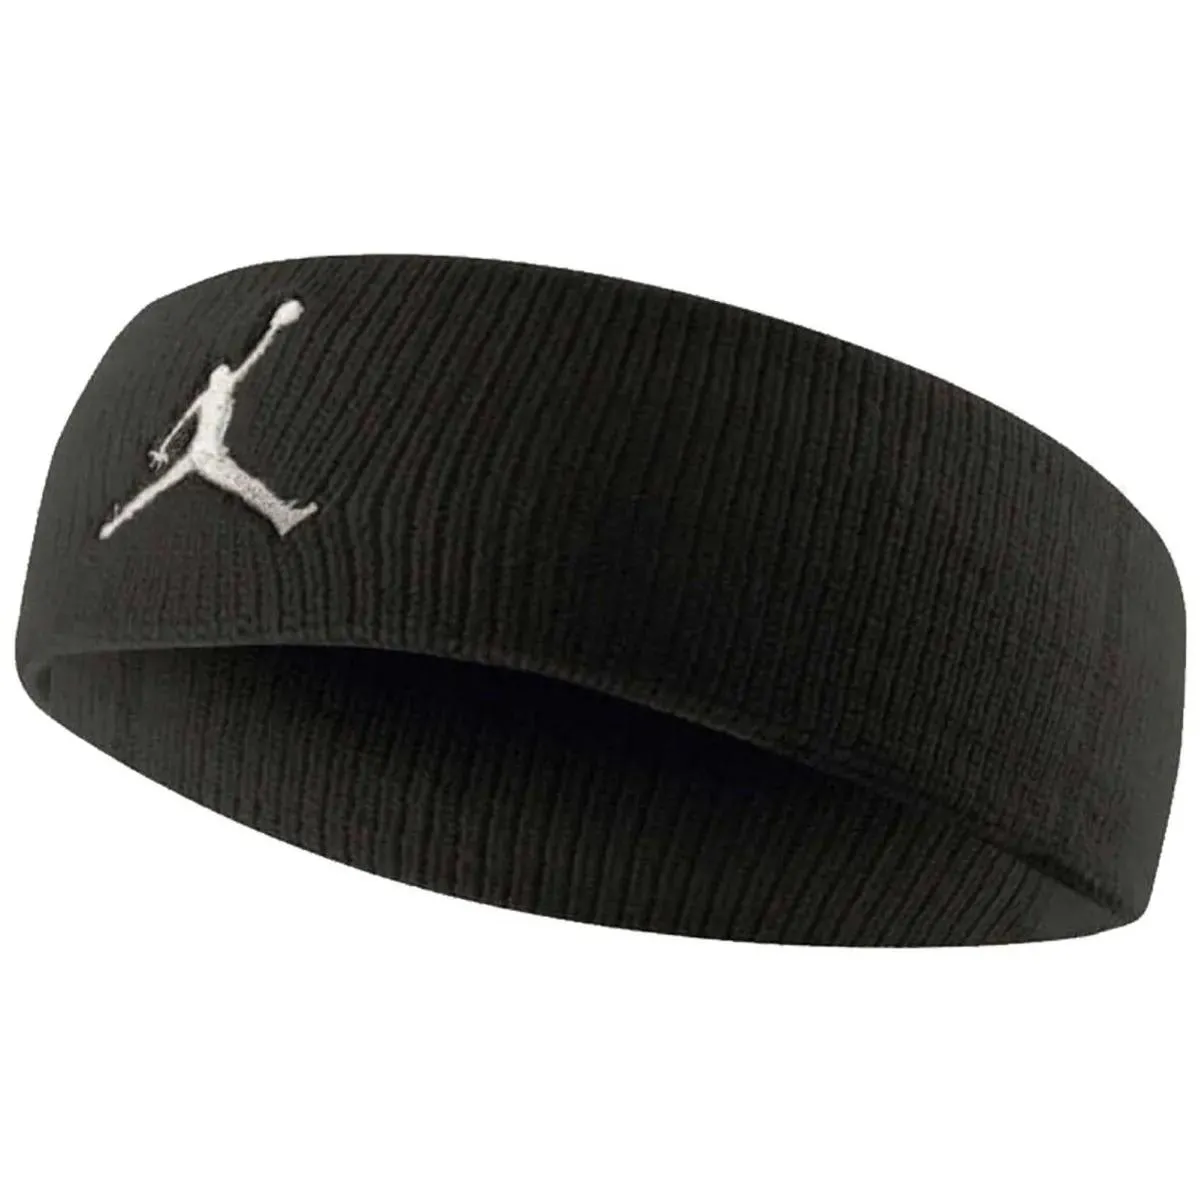 Jr Nike HEADBAND JORDAN JUMPMAN HEADBAND BLACK/WHITE 